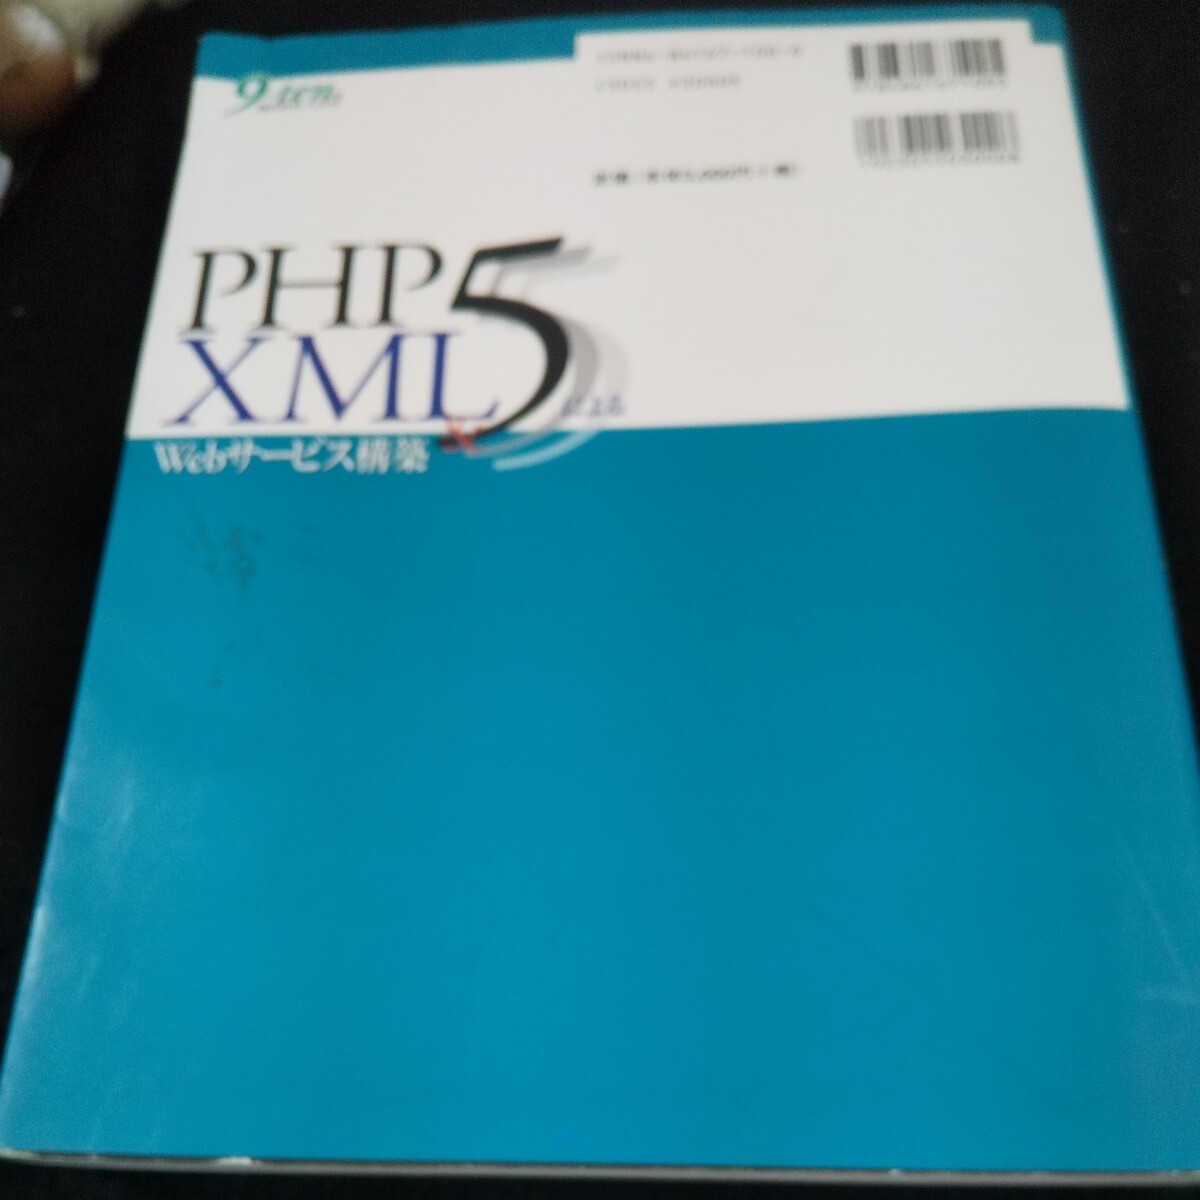 L-425 PHP XML5による Webサービス構築 佐久嶋ひろみ[著] 9-ten. 2006年初版発行 XML文書のの構造 処理 プロトコル プログラム など※10_傷、汚れあり